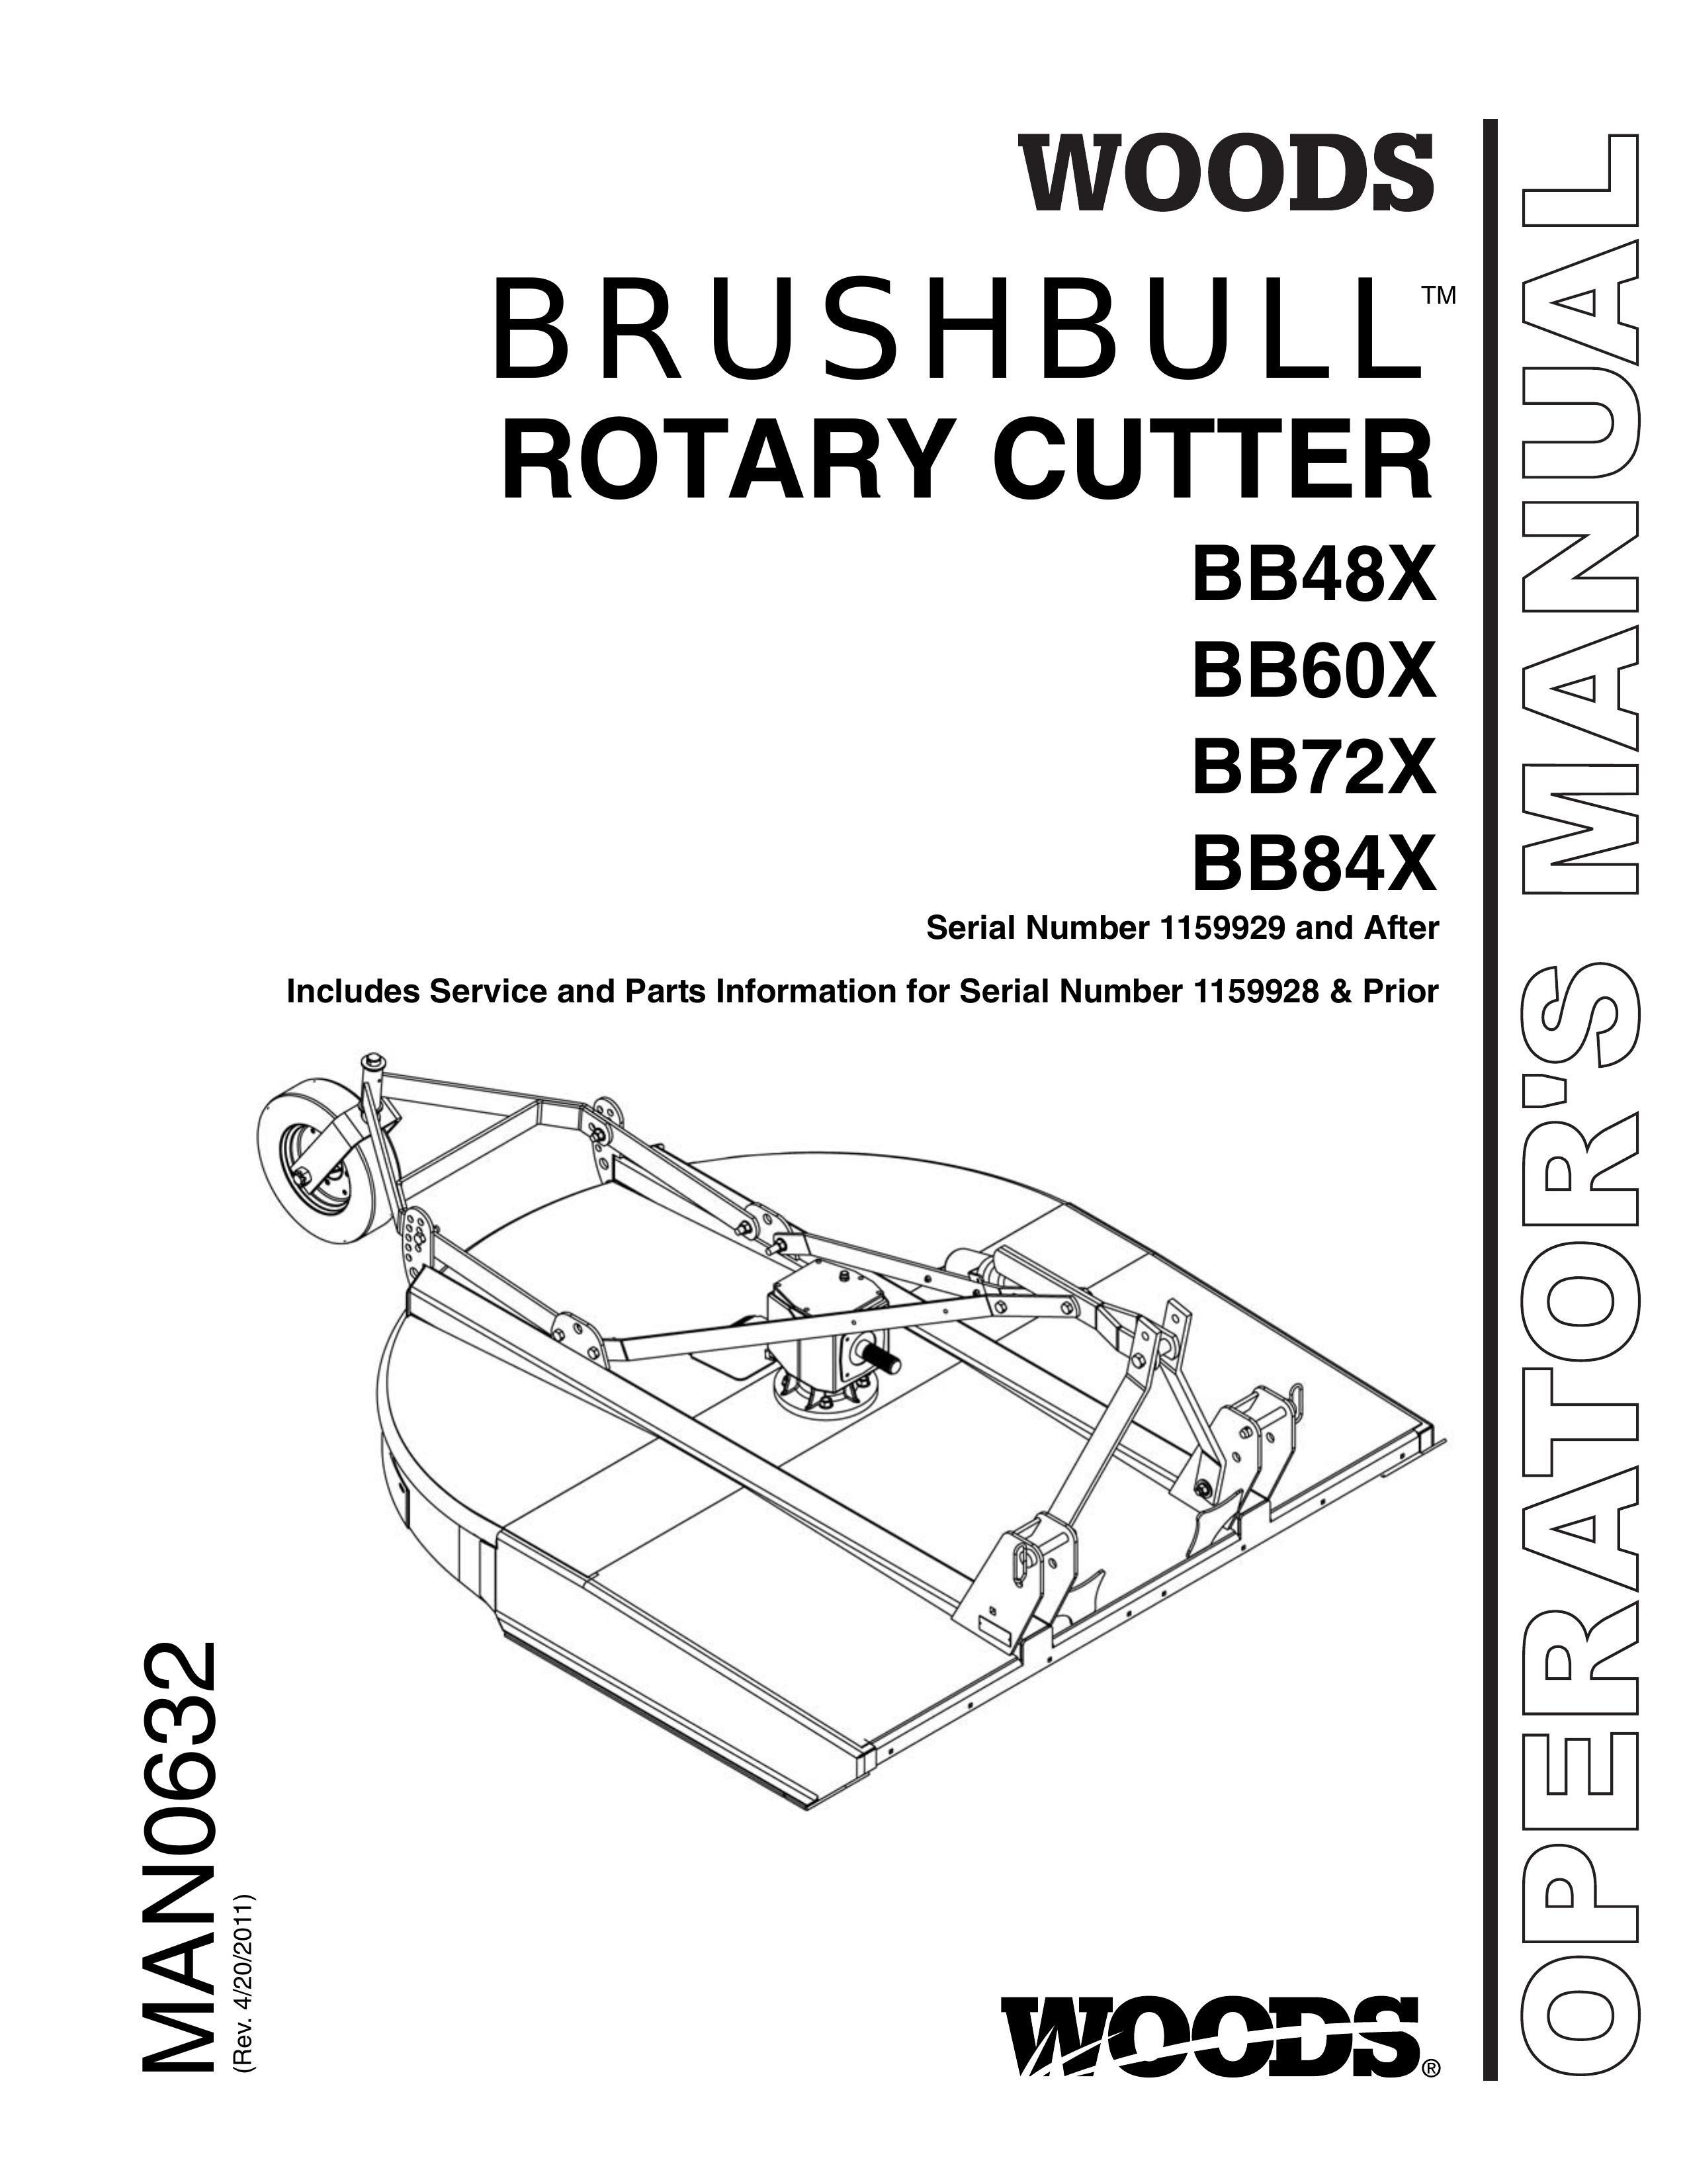 Woods Equipment BB72X Brush Cutter User Manual